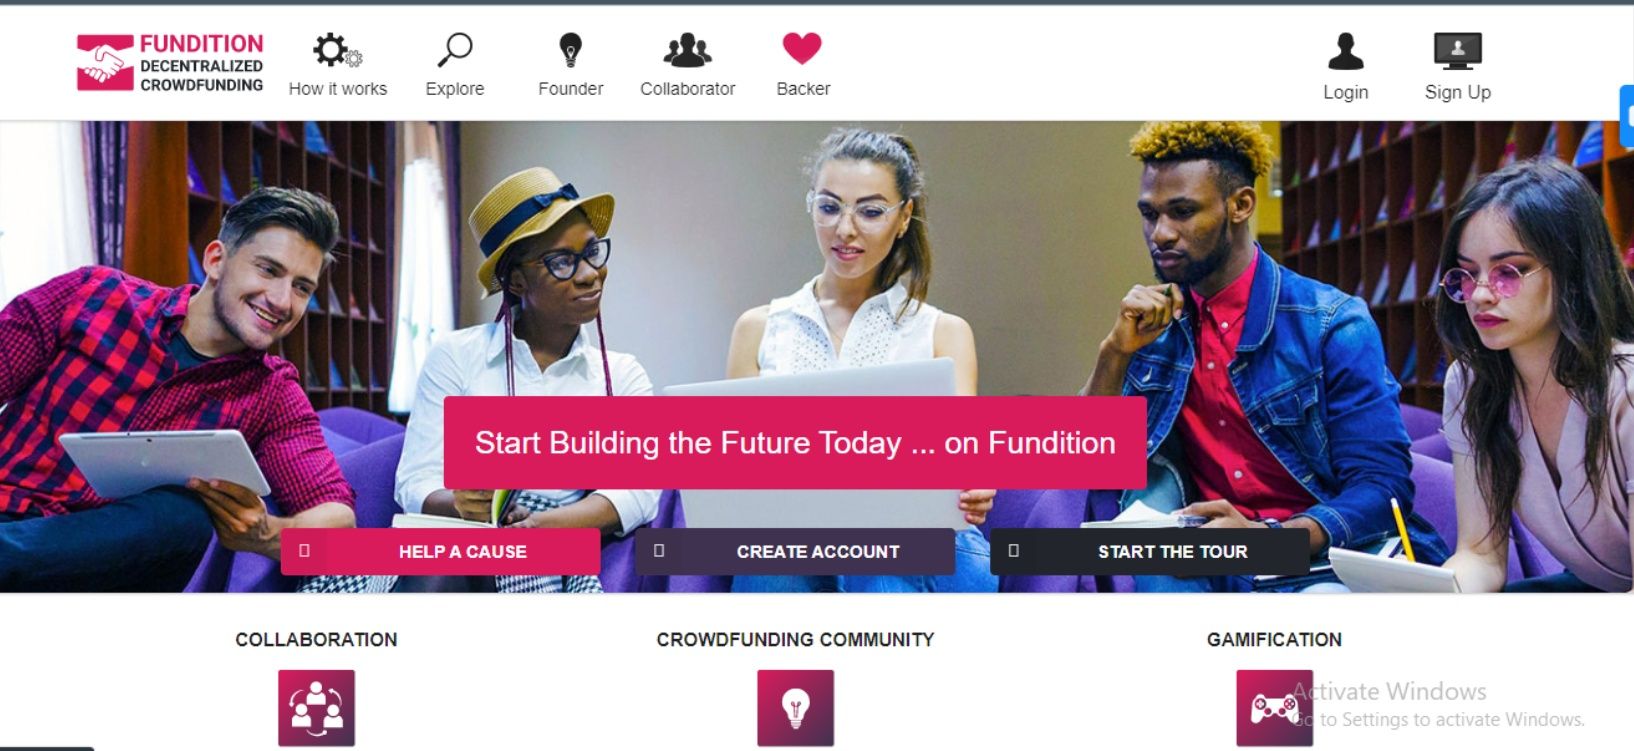 Fundition webpage screenshot